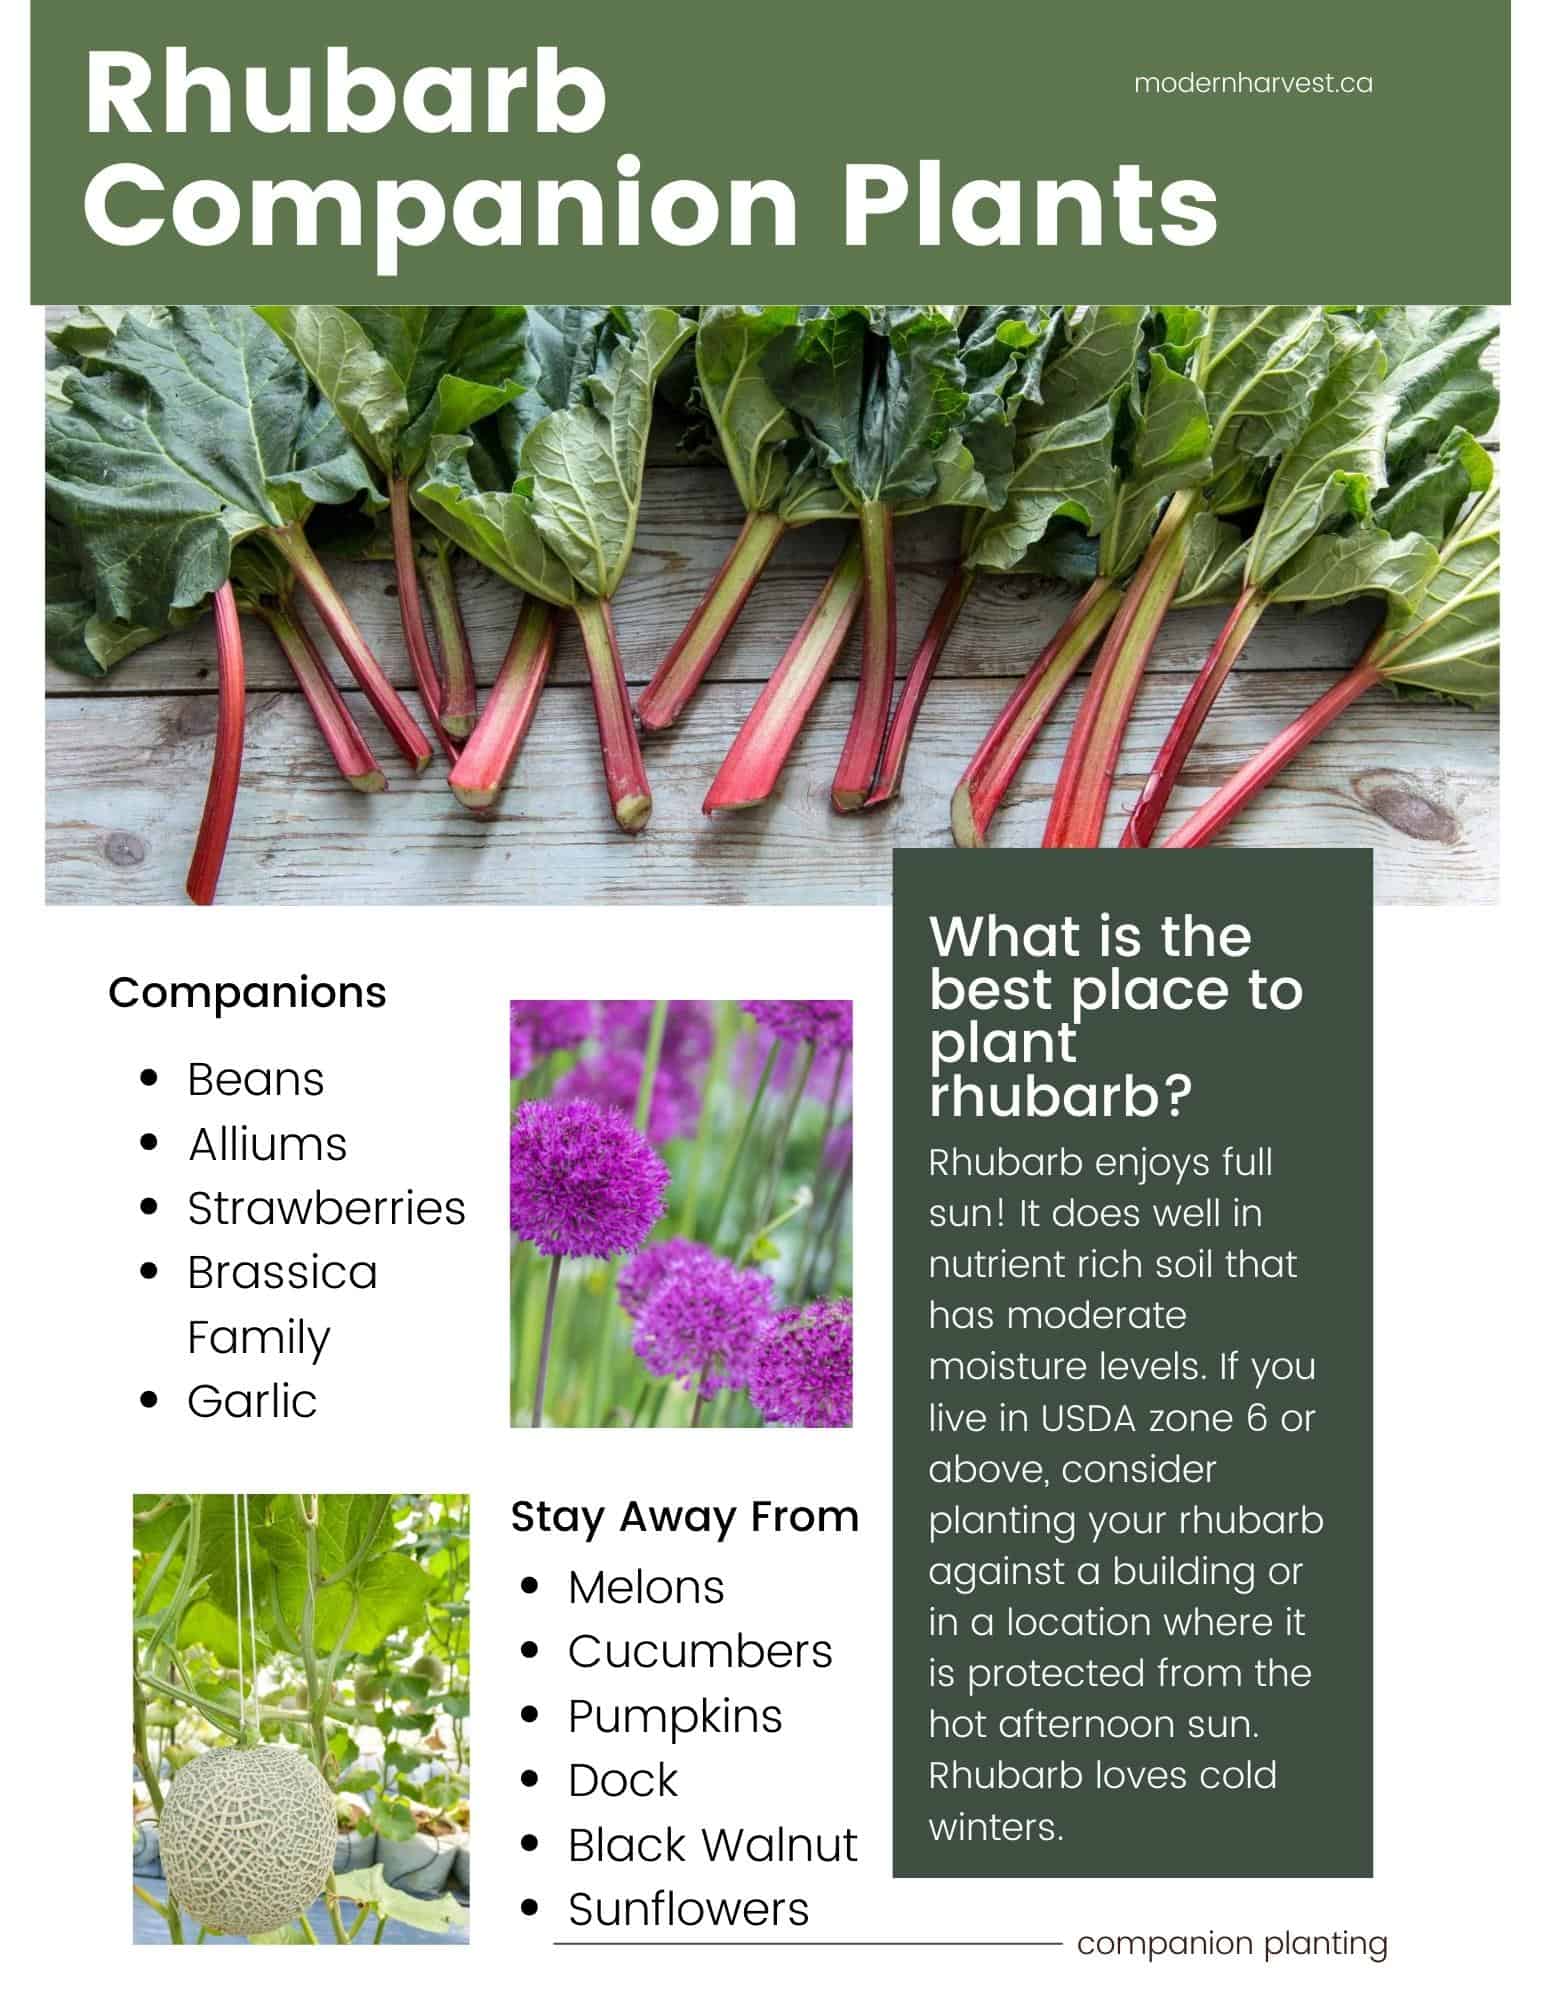 Printable rhubarb companion planting guide.